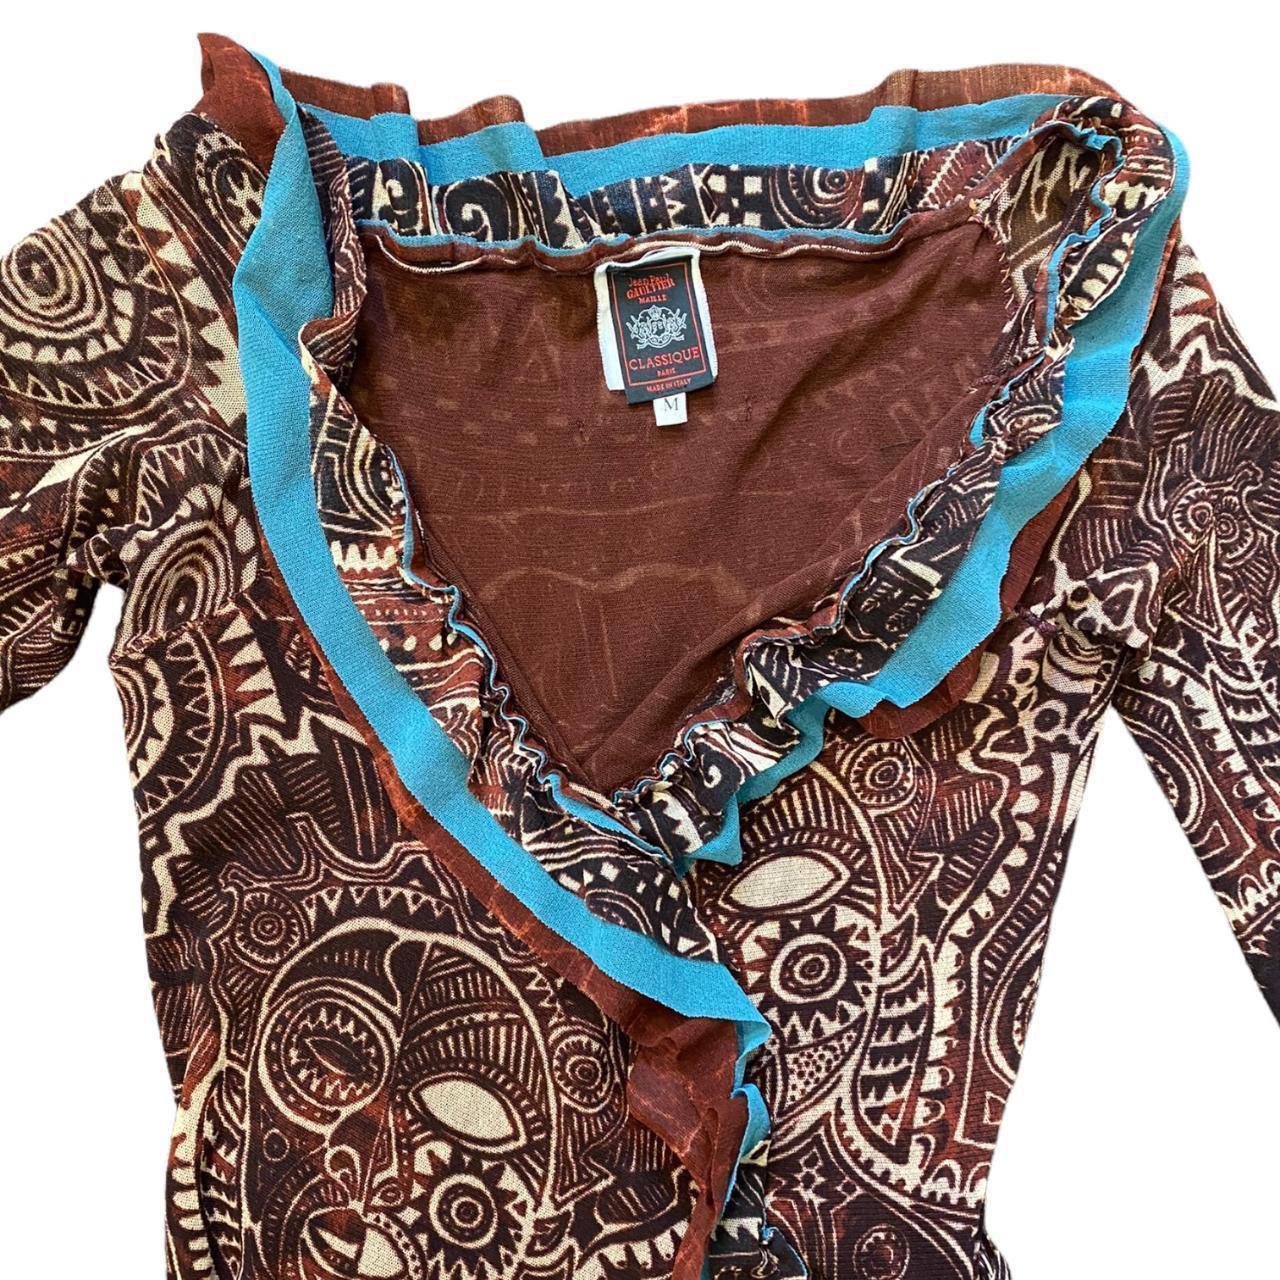 Jean Paul Gaultier Classique Dress

1990's Vintage Tribal Aztec Tattoo Print

Wrap Dress

Lightweight Stretchy Silky Mesh Material 

100% Authentic

SIZE: M 

ACTUAL MEASUREMENTS:  Shoulder to Hem: 39